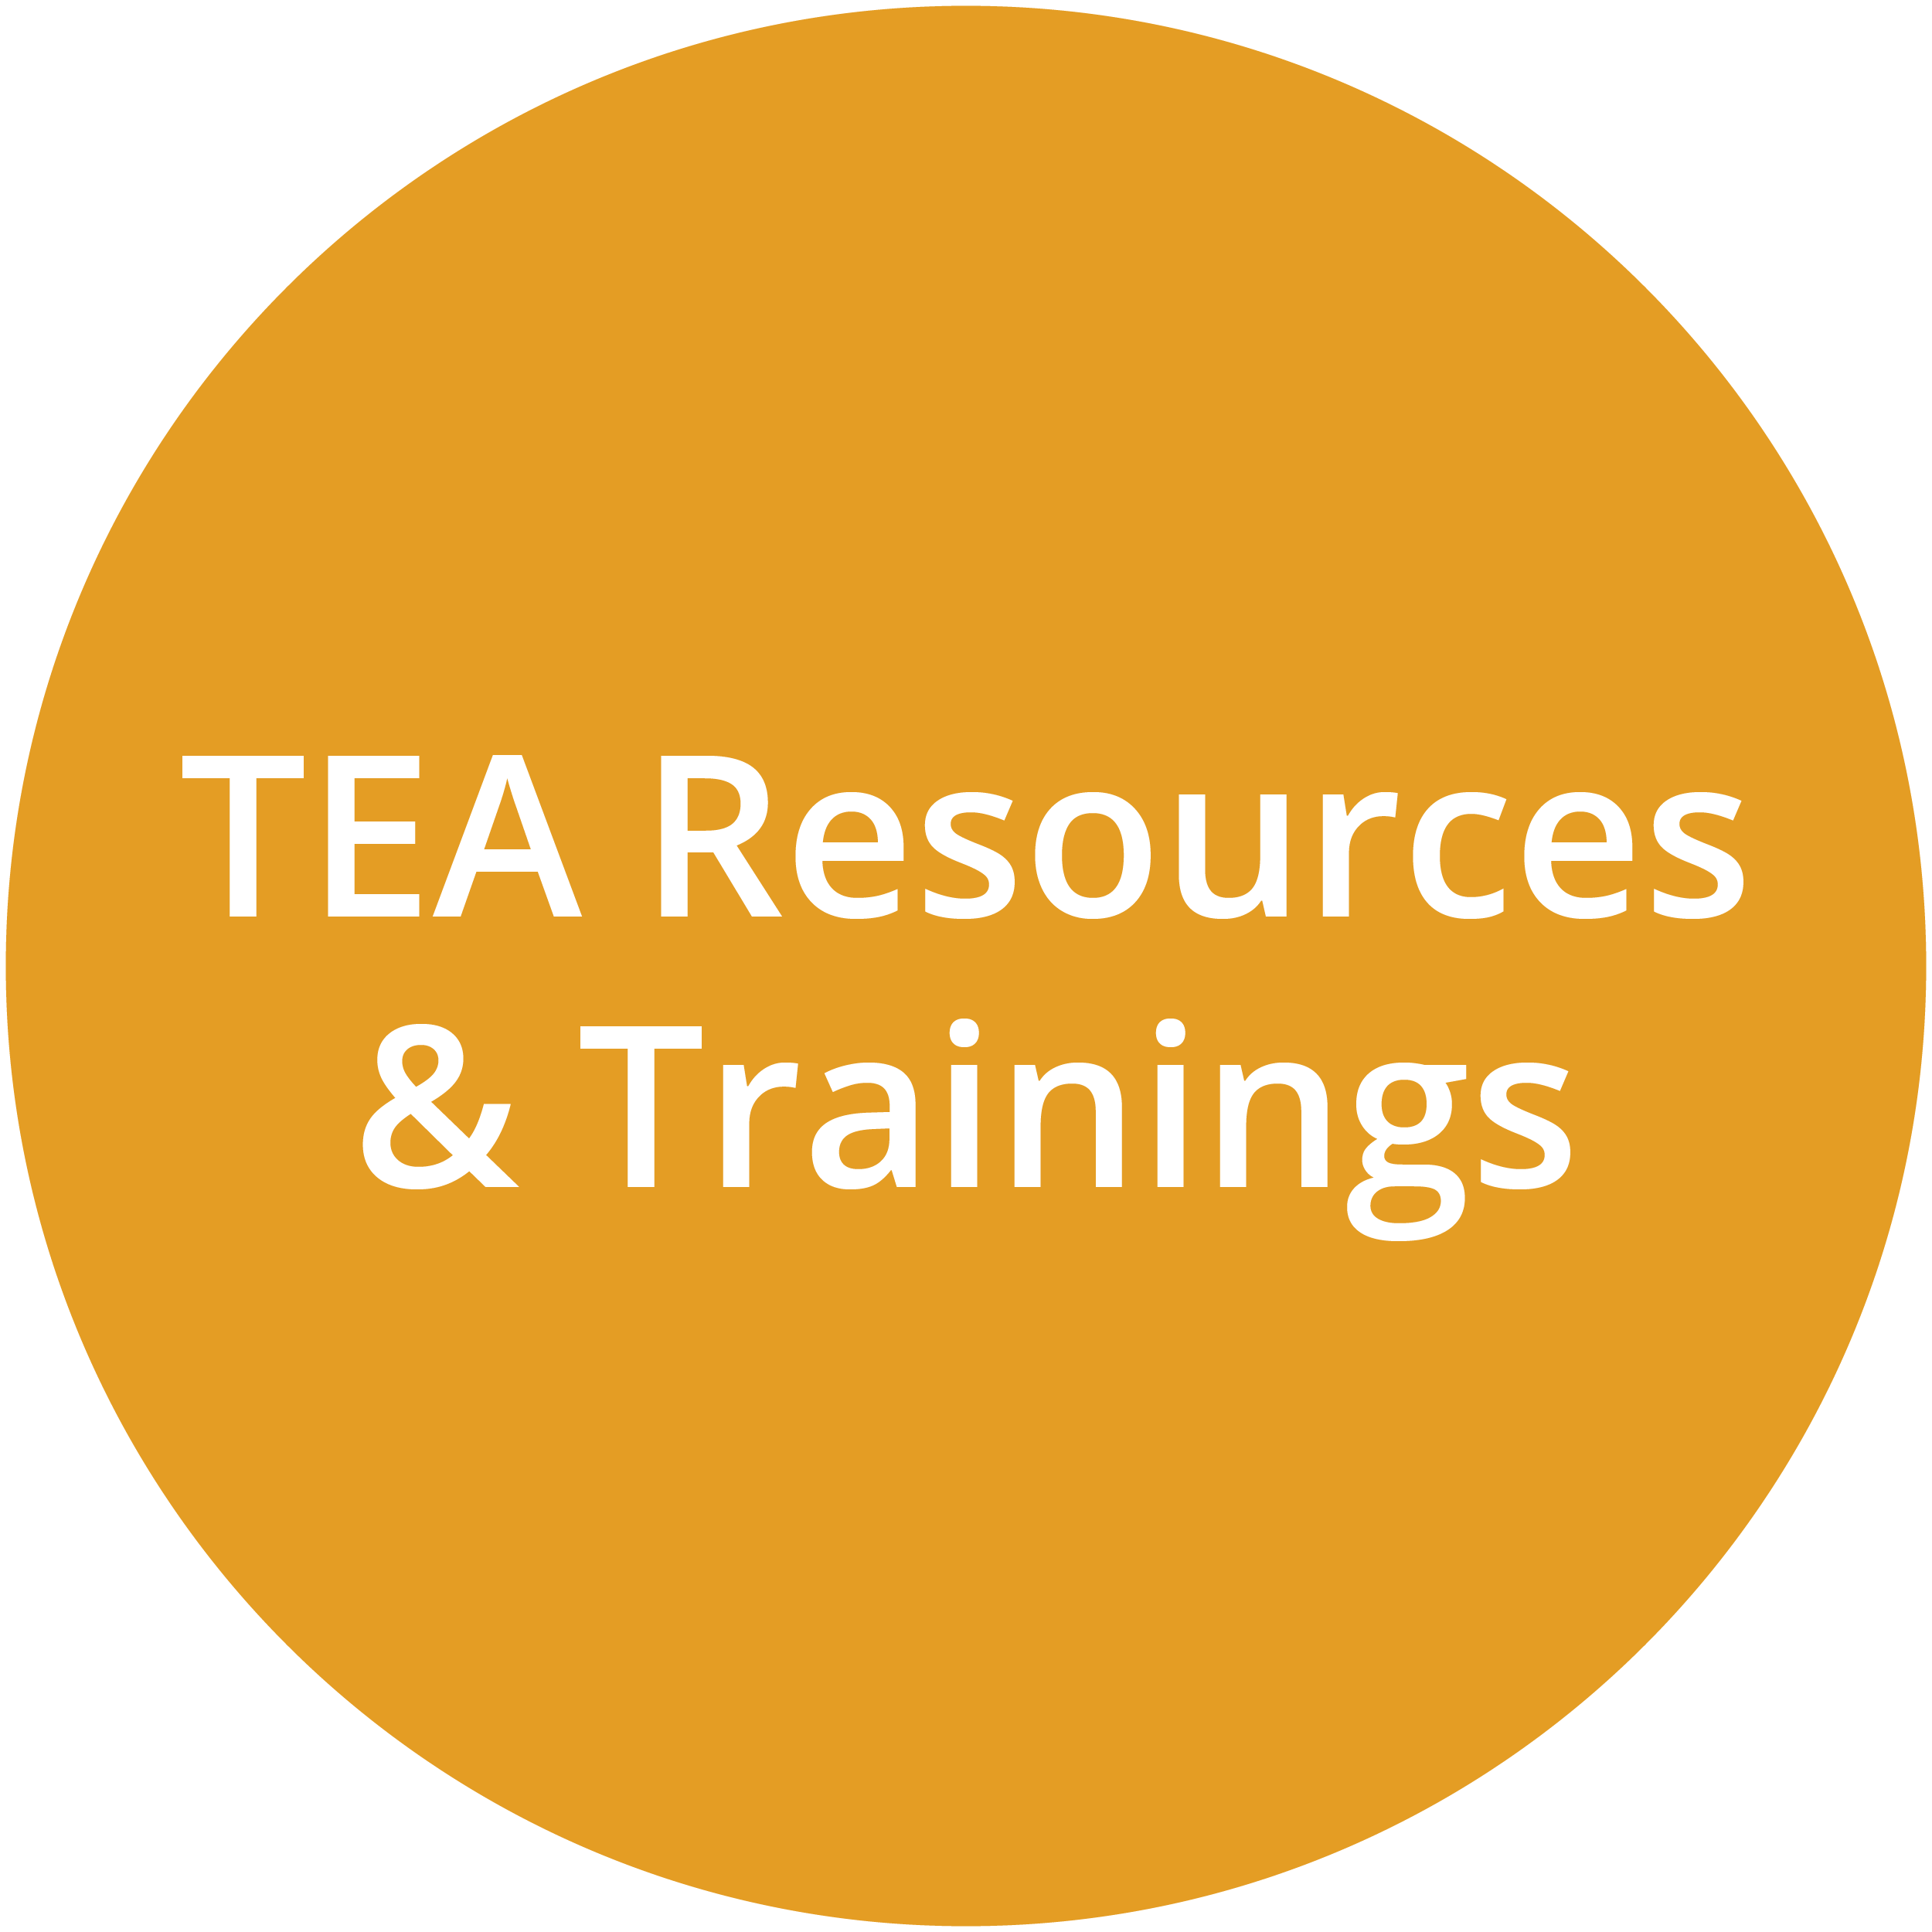 TEA Resources & Trainings